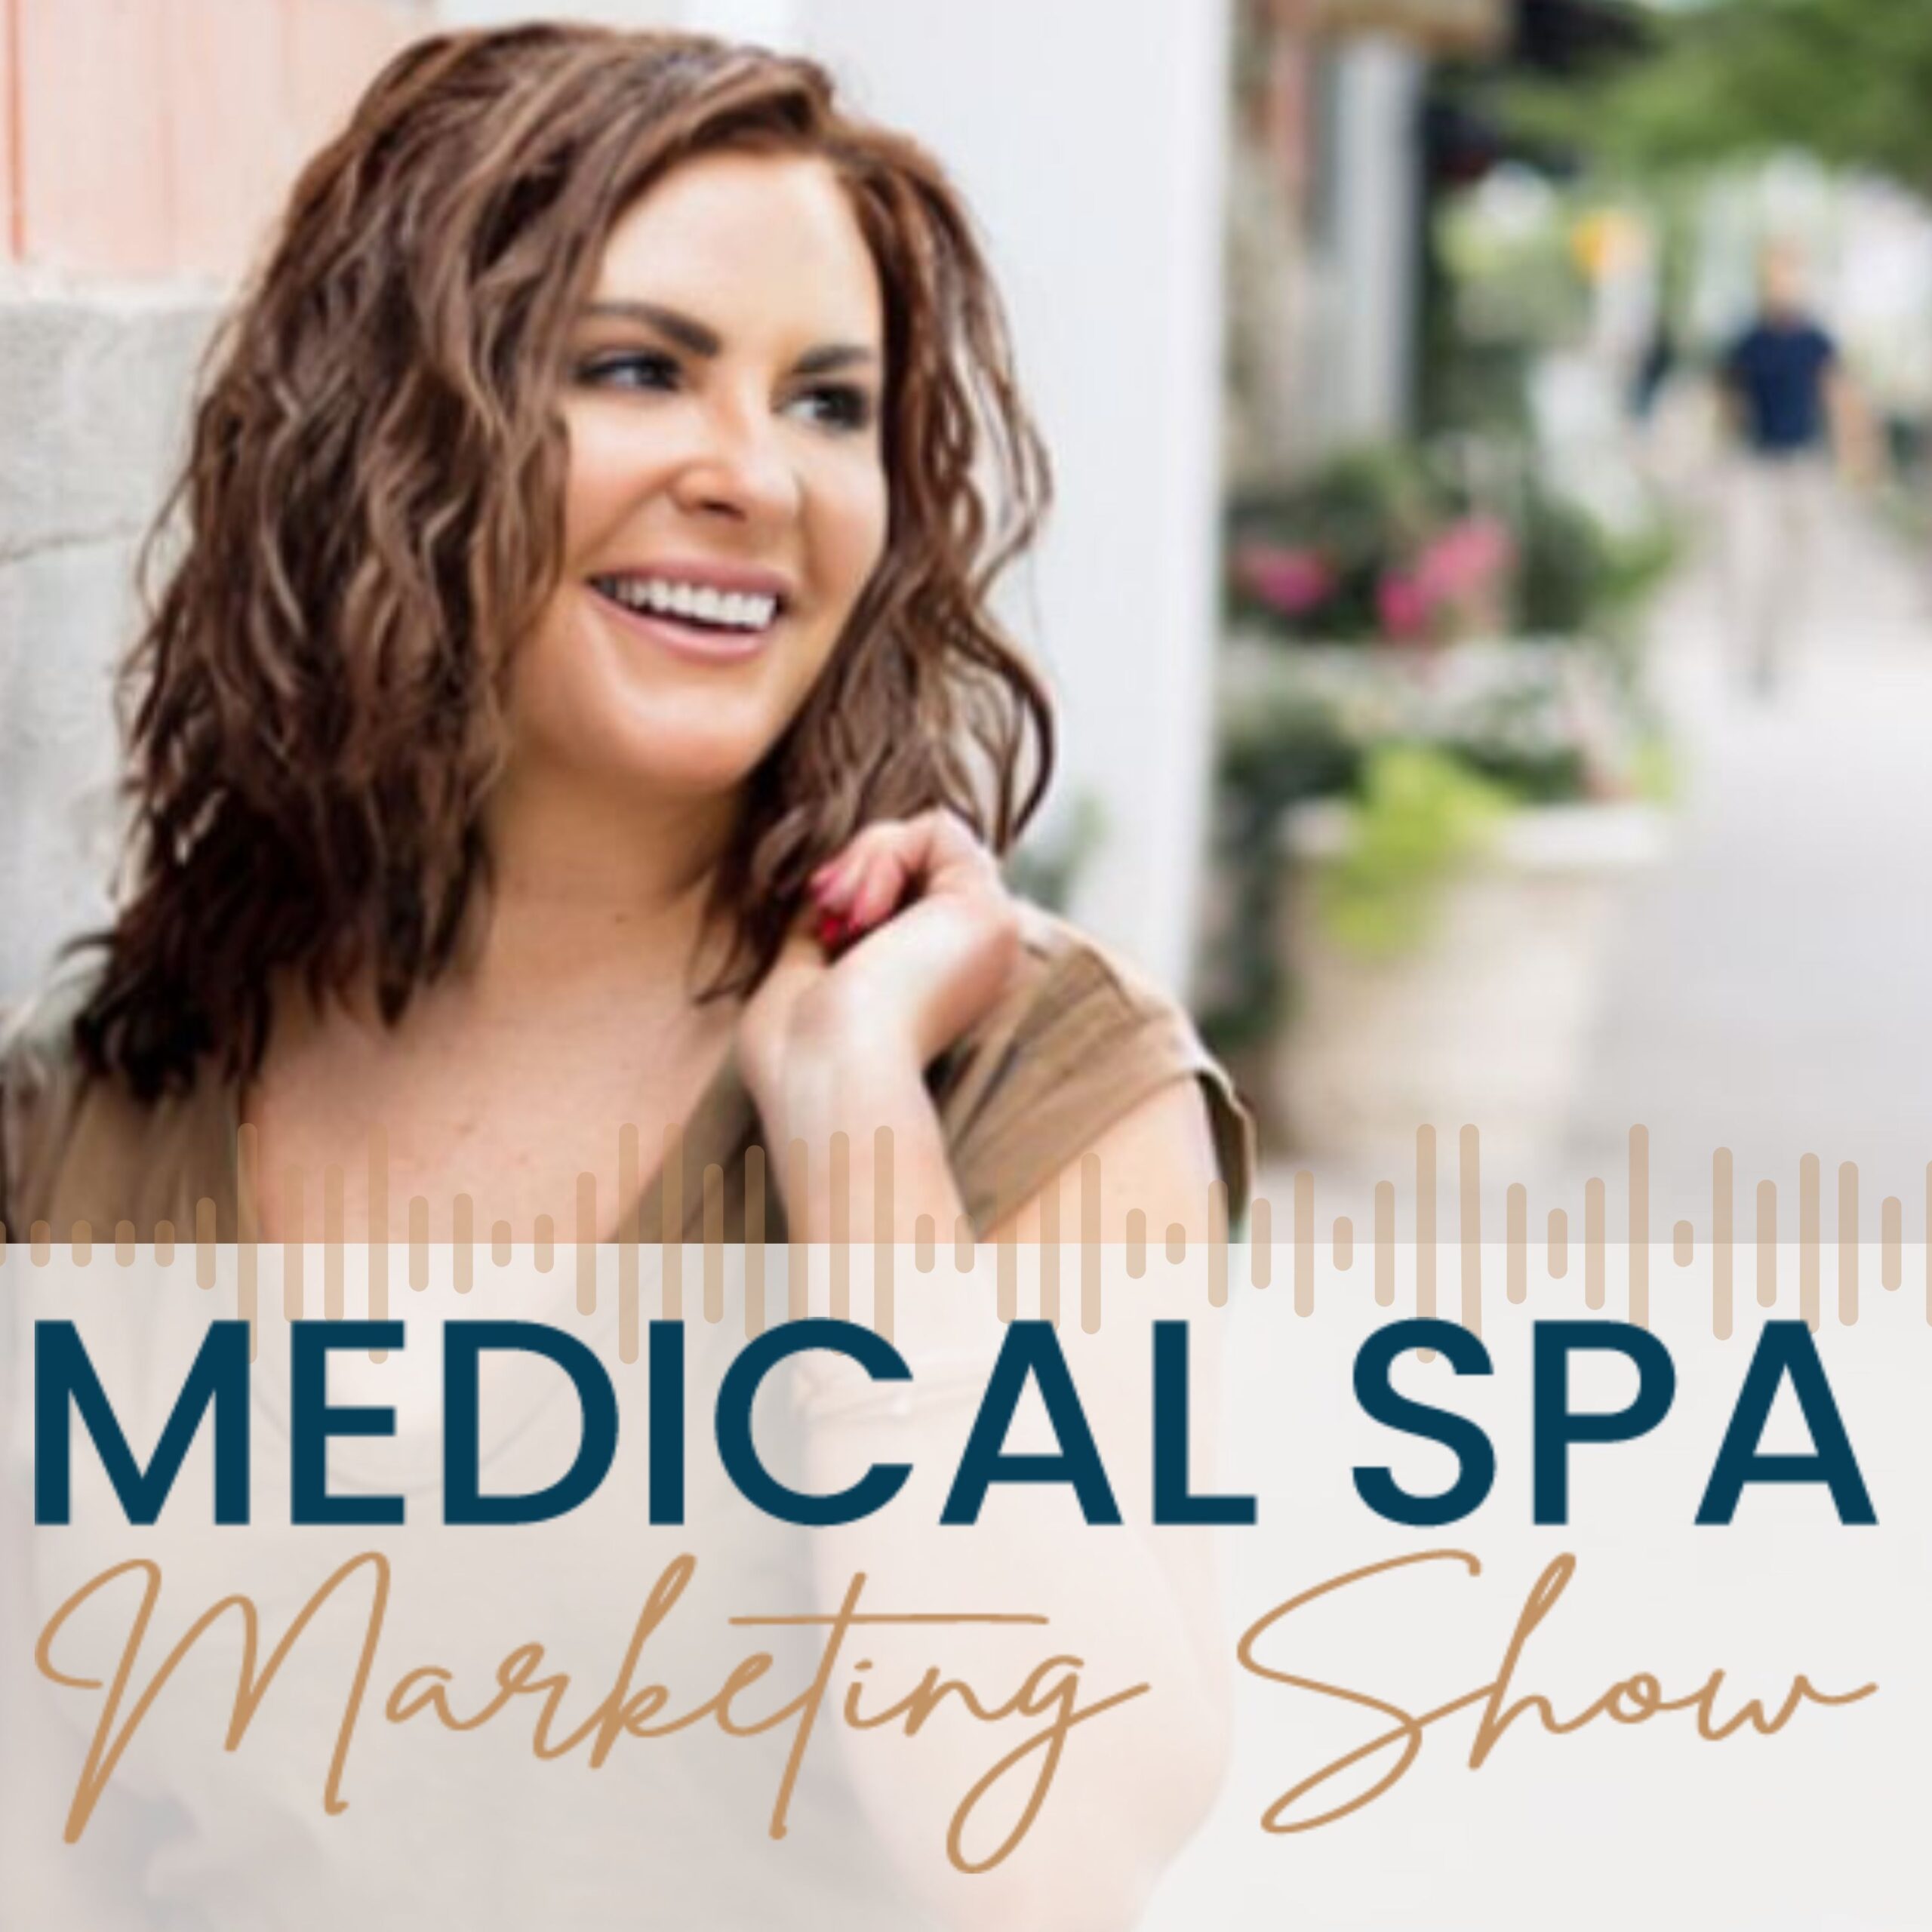 Medical Spa Marketing Show